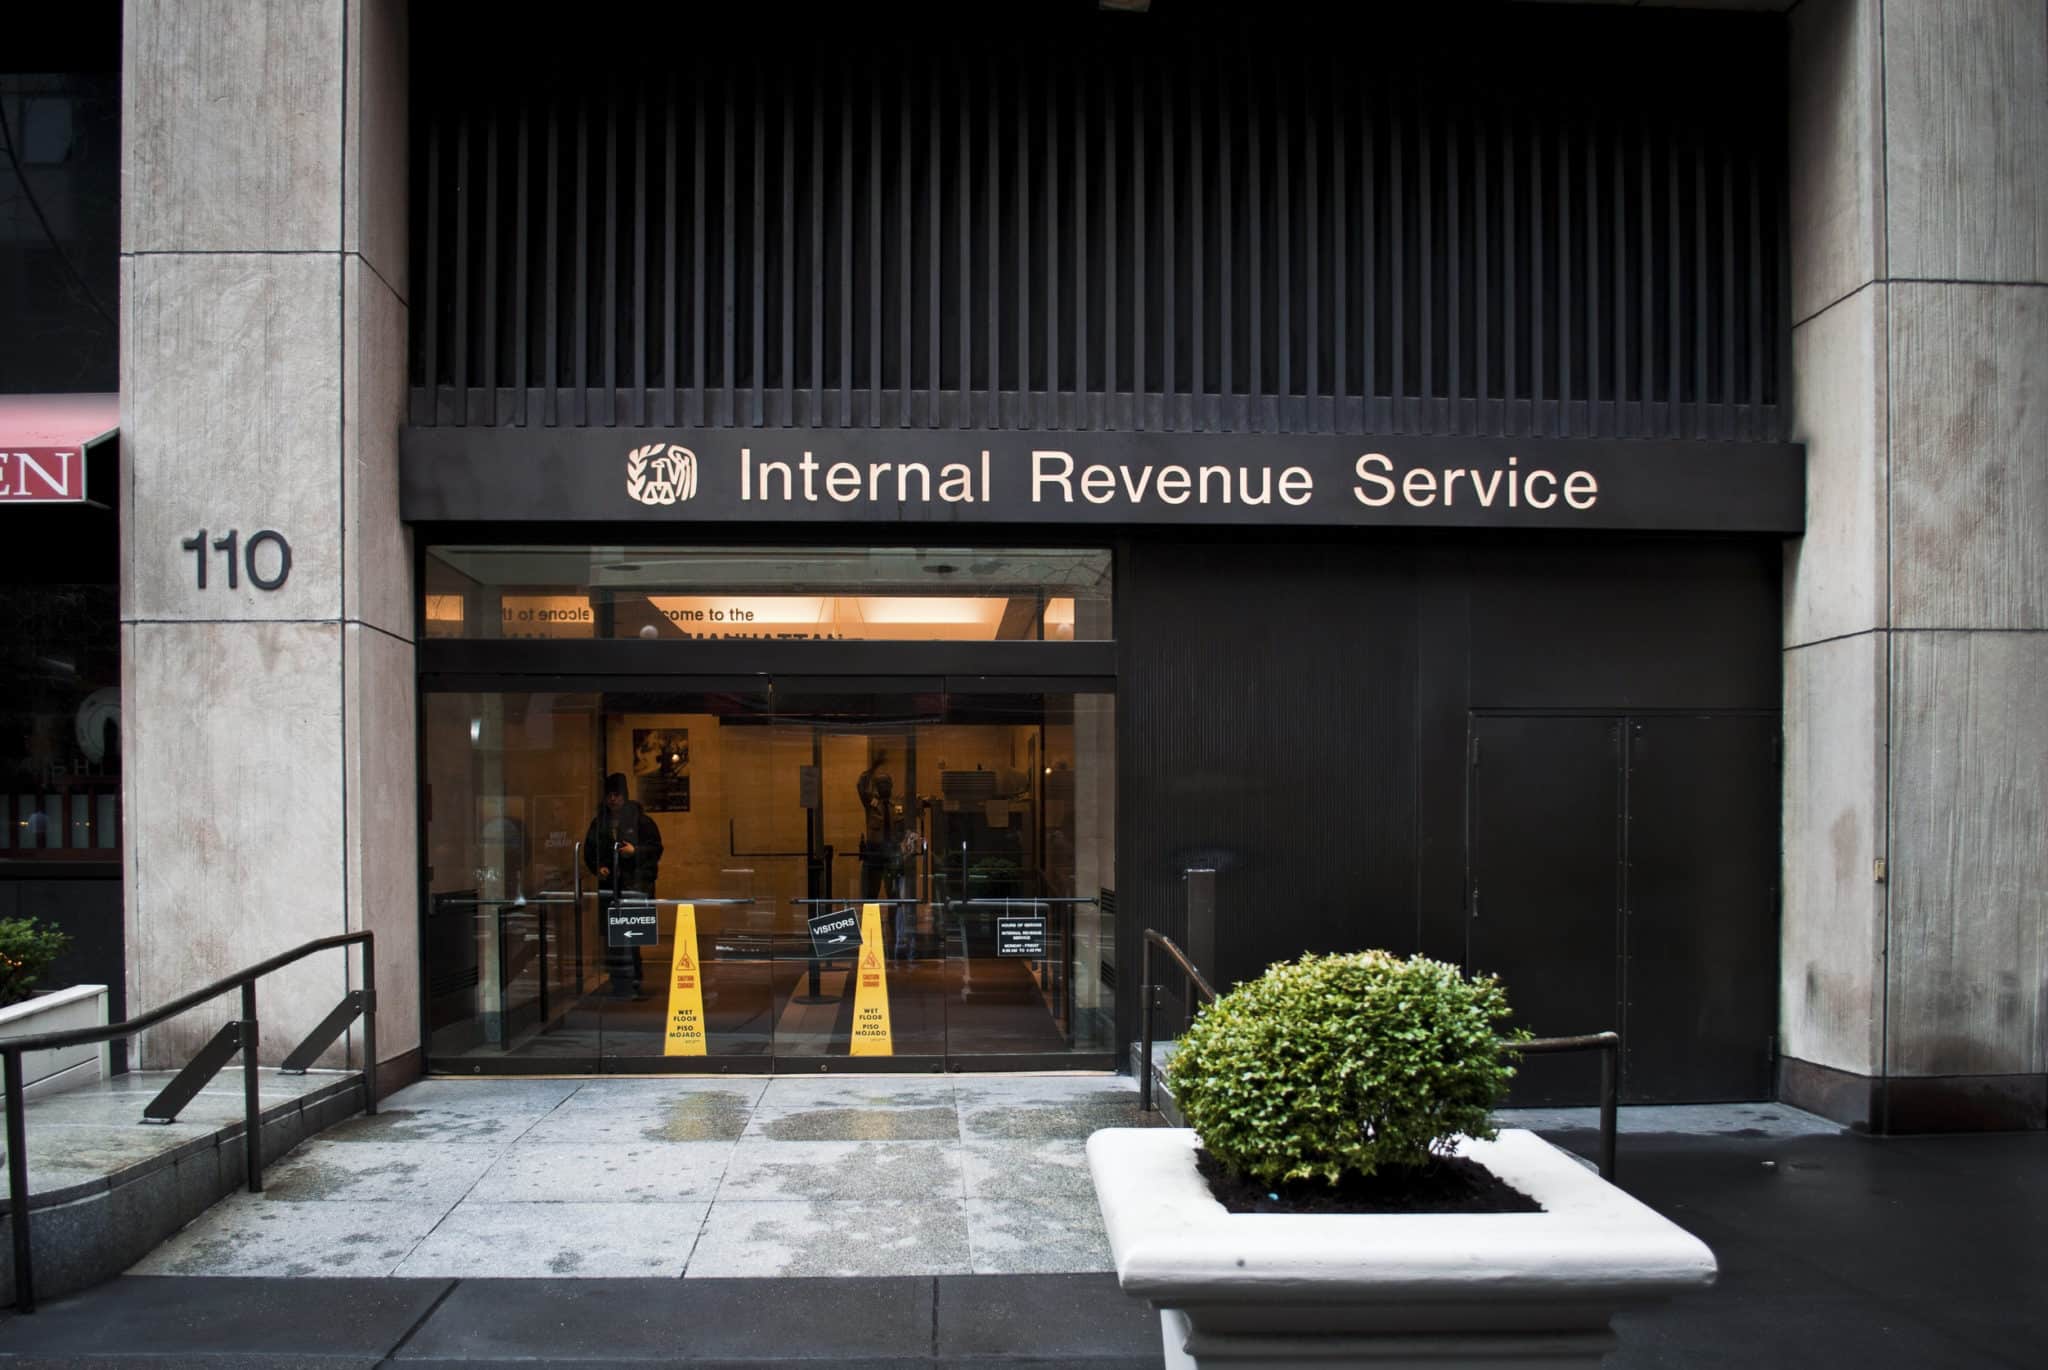 The Internal Revenue Building